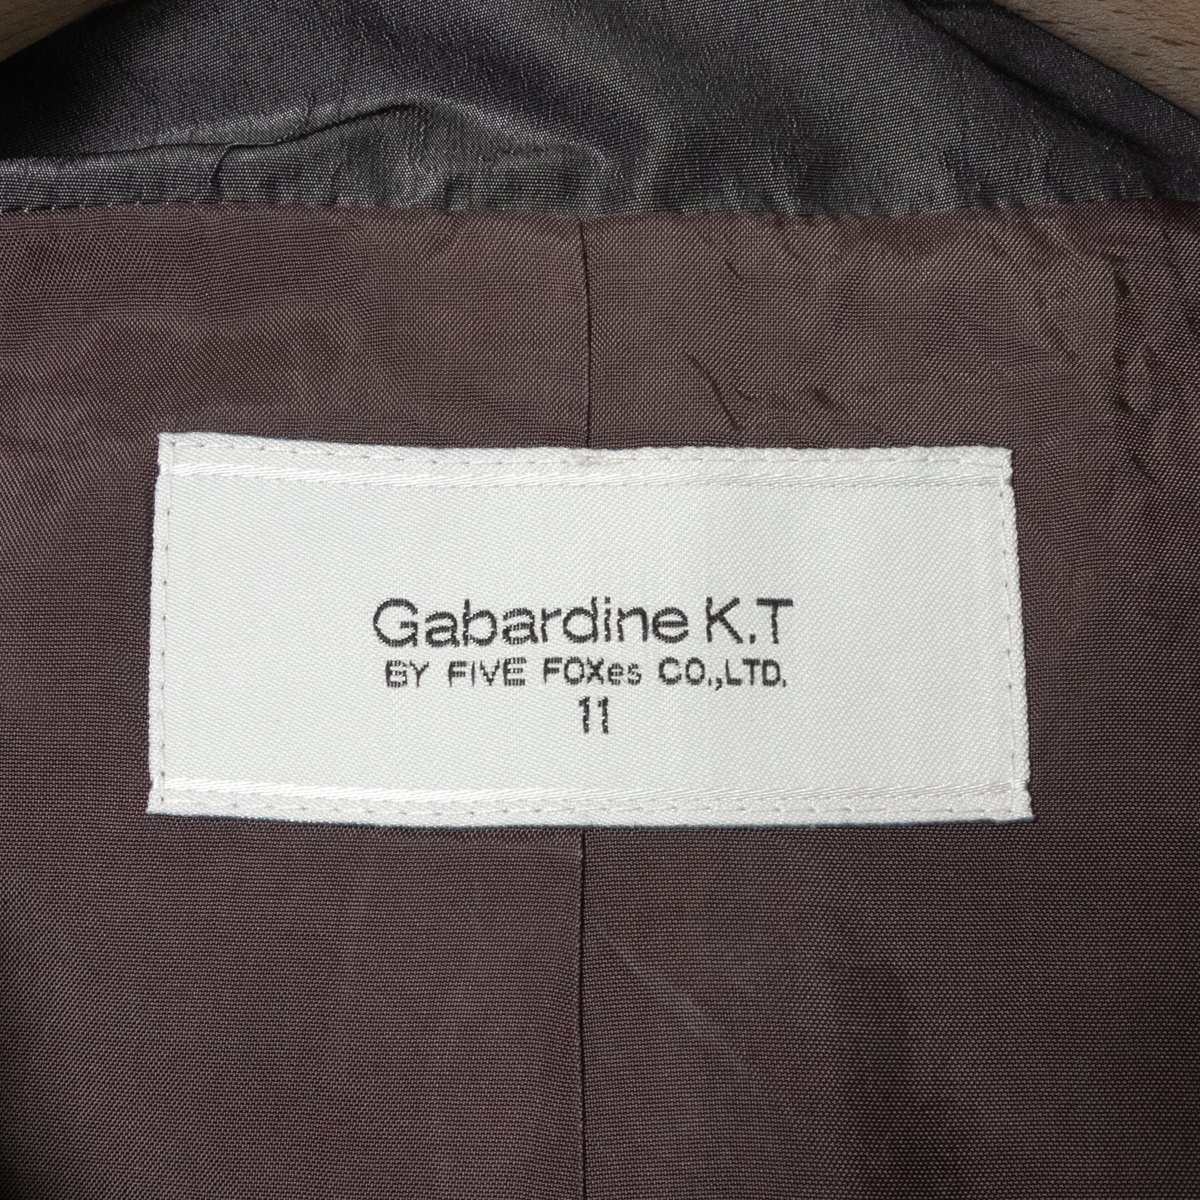 Gabardine K.T ギャバジンケーティー フリルジャケット 上着 羽織り 11 ポリエステル100% グレーブラック 綺麗め カジュアル 婦人服_画像2